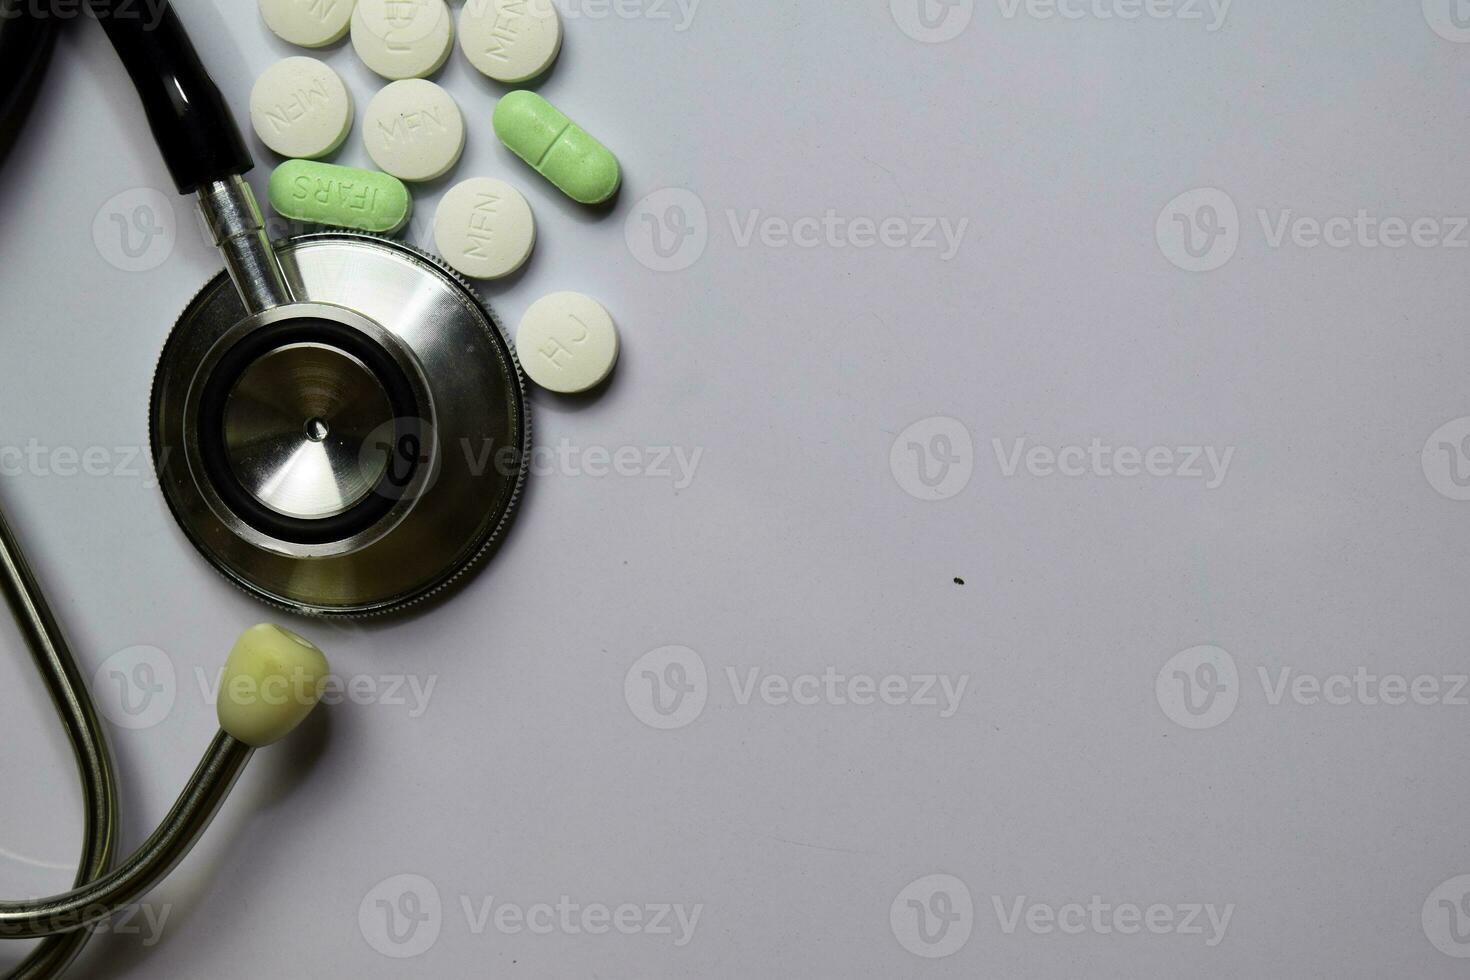 remédio estetoscópio e diferente tábua pílulas. cuidados de saúde ou médico conceito. foto